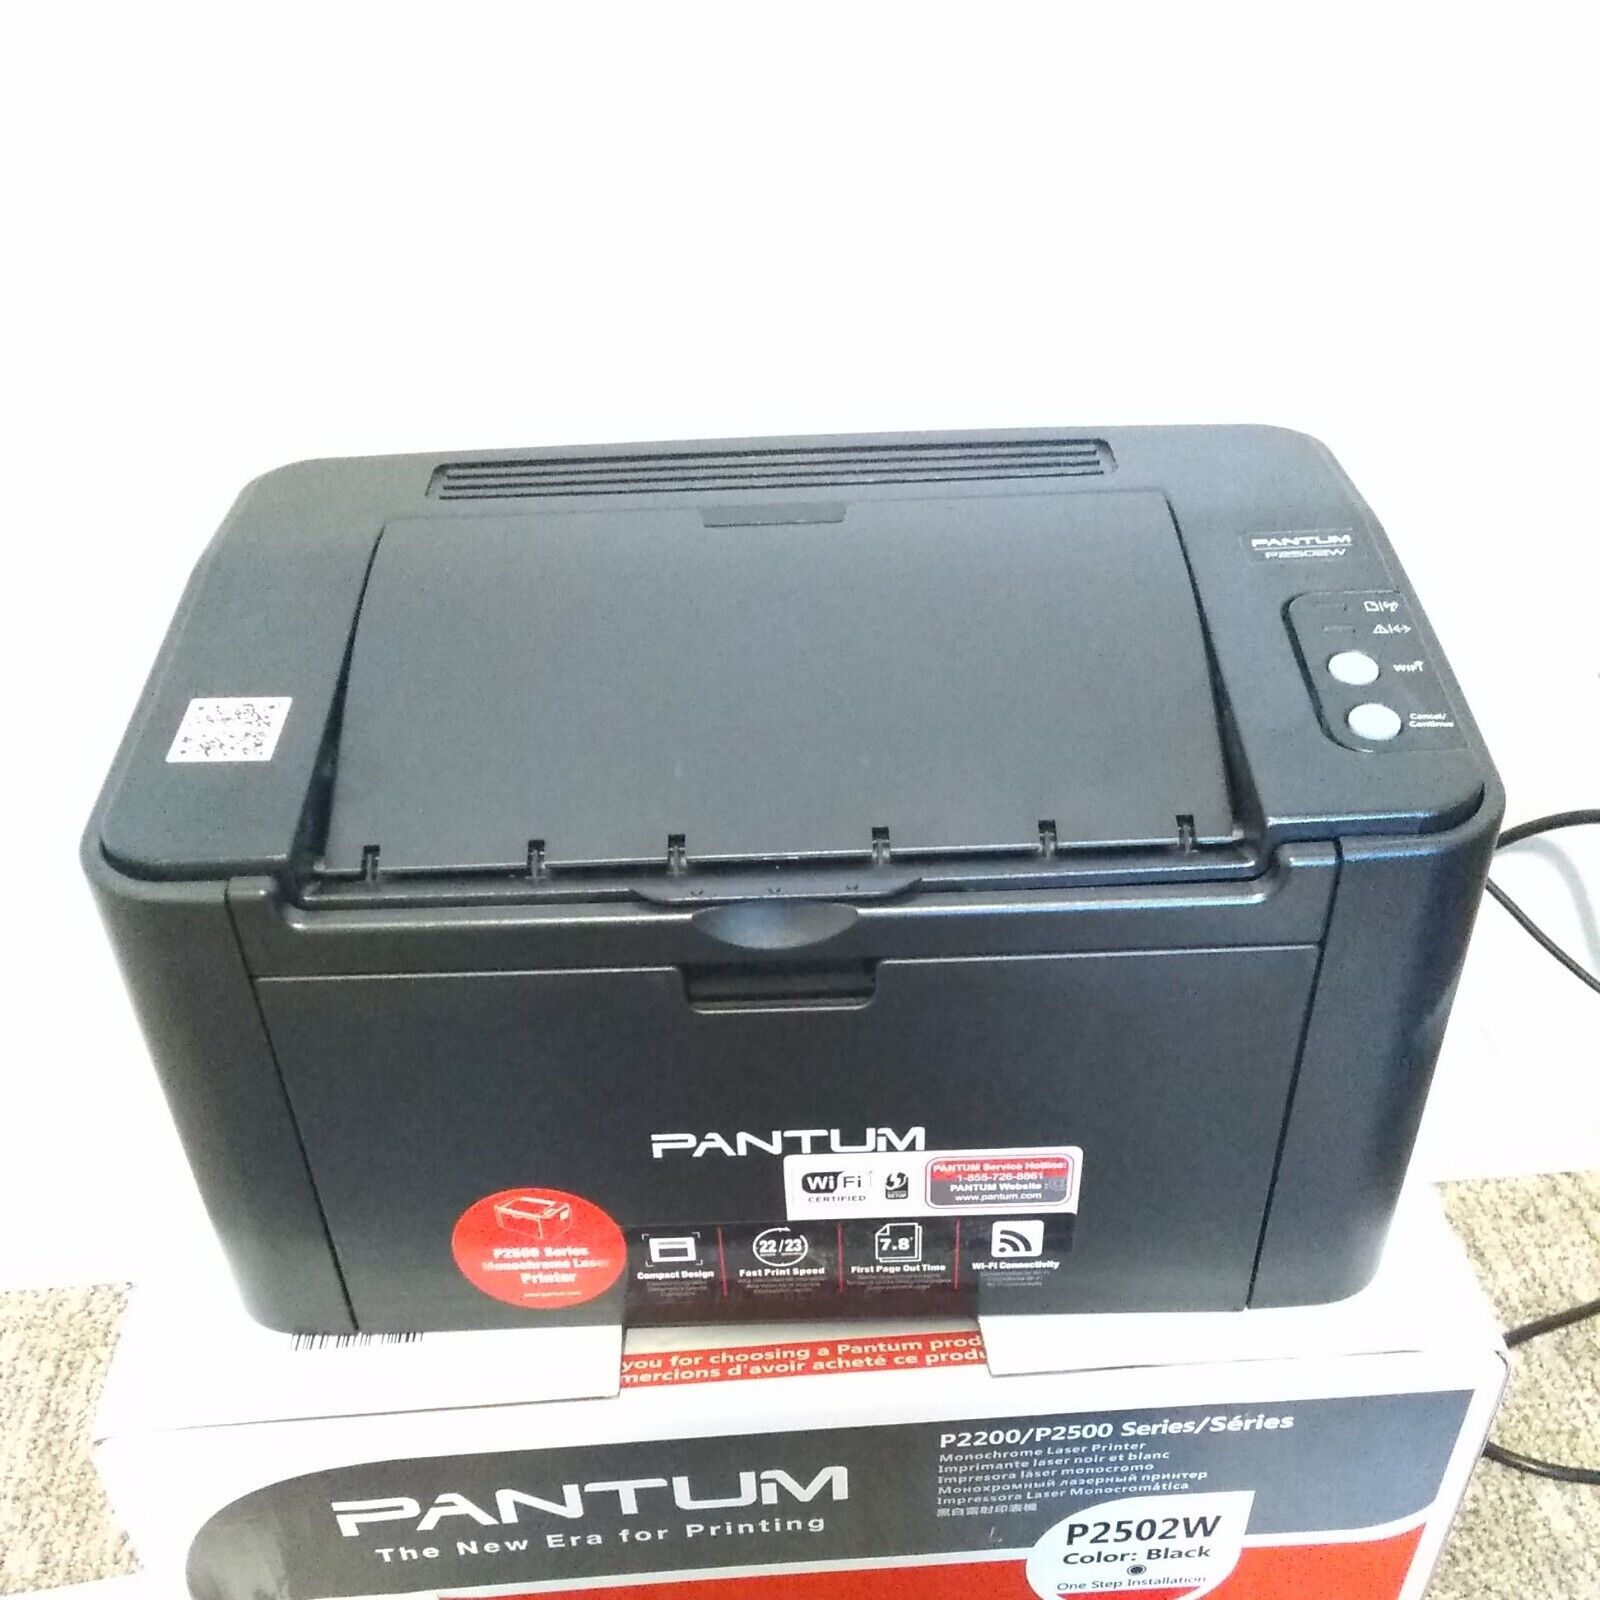 Pantum P2502W Laser Printer Monochrome Wireless Networking Black-WiFi Excellent 